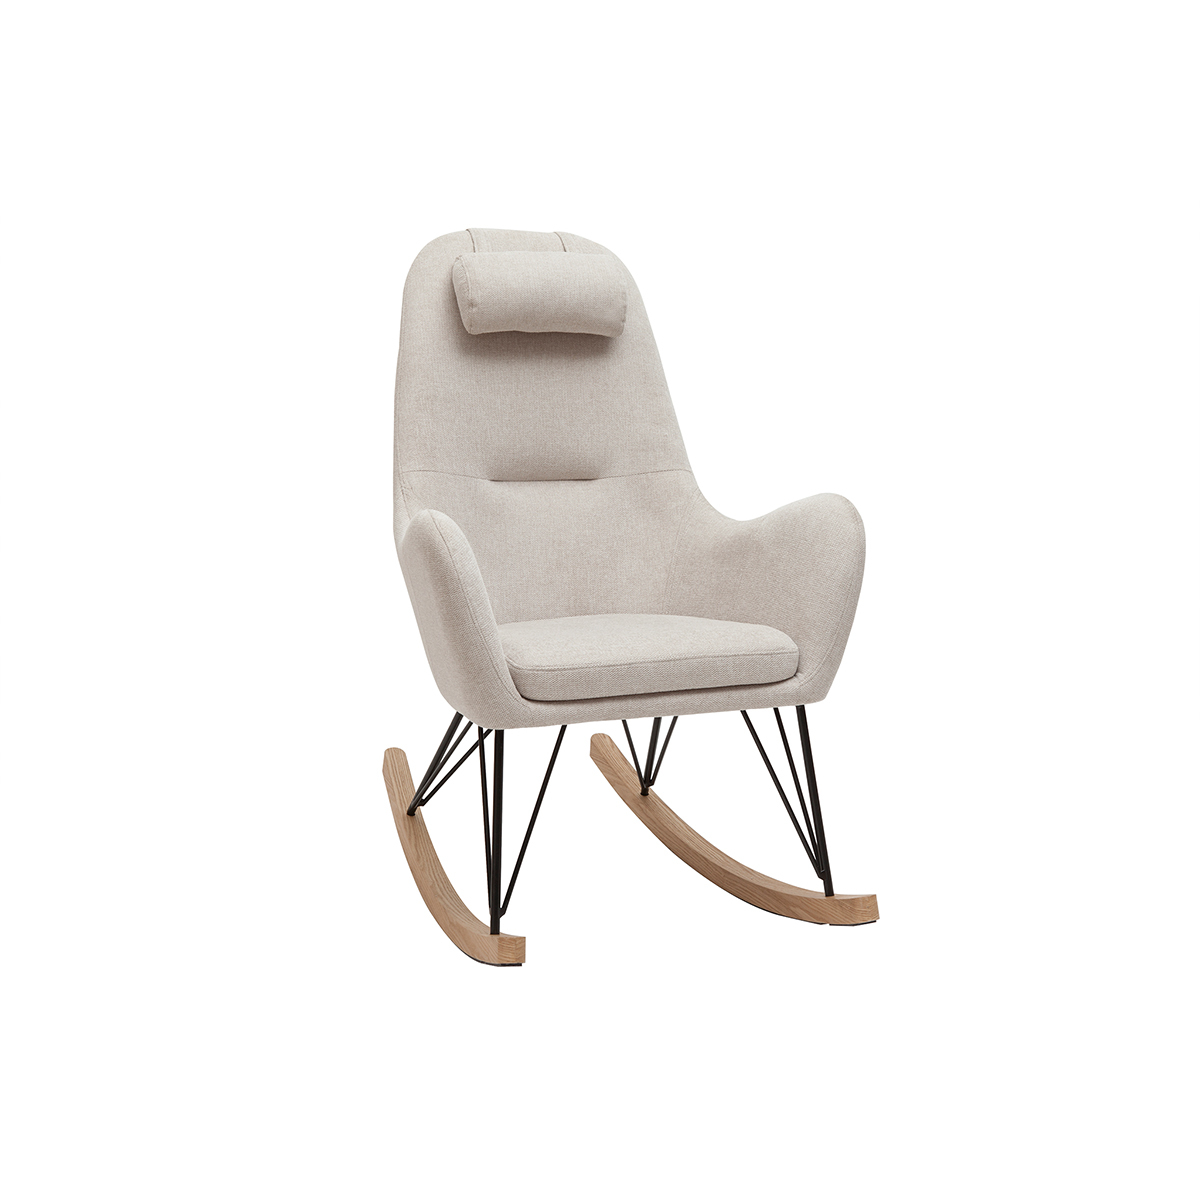 Rocking chair scandinave en tissu beige, métal noir et bois clair MANIA vue1